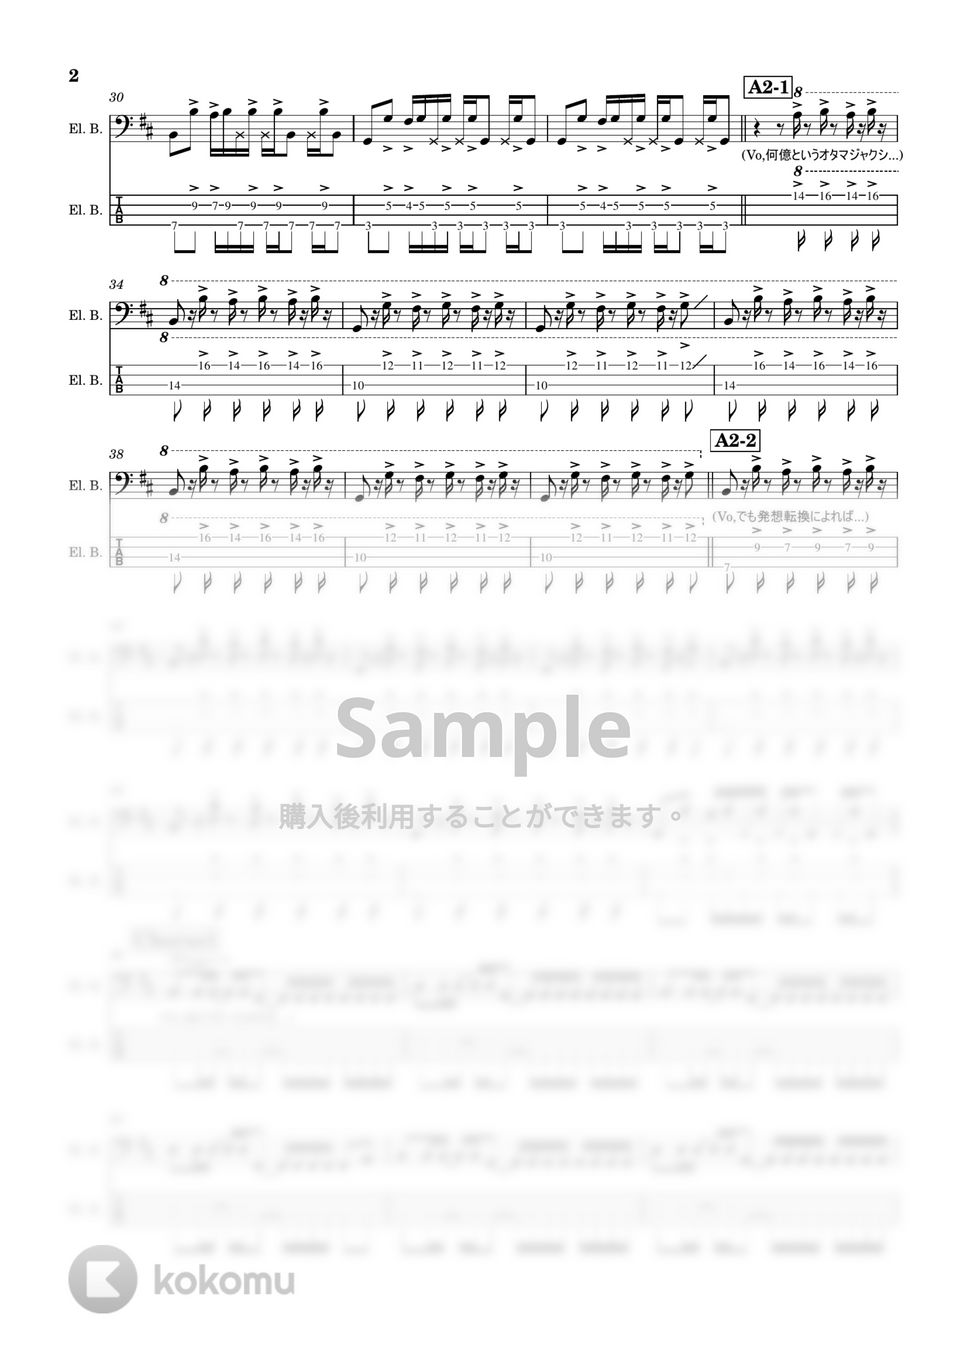 RAD WIMPS - ギミギミック (ベース/RAD WIMPS/TAB/スラップ) by TARUO's_Bass_Score